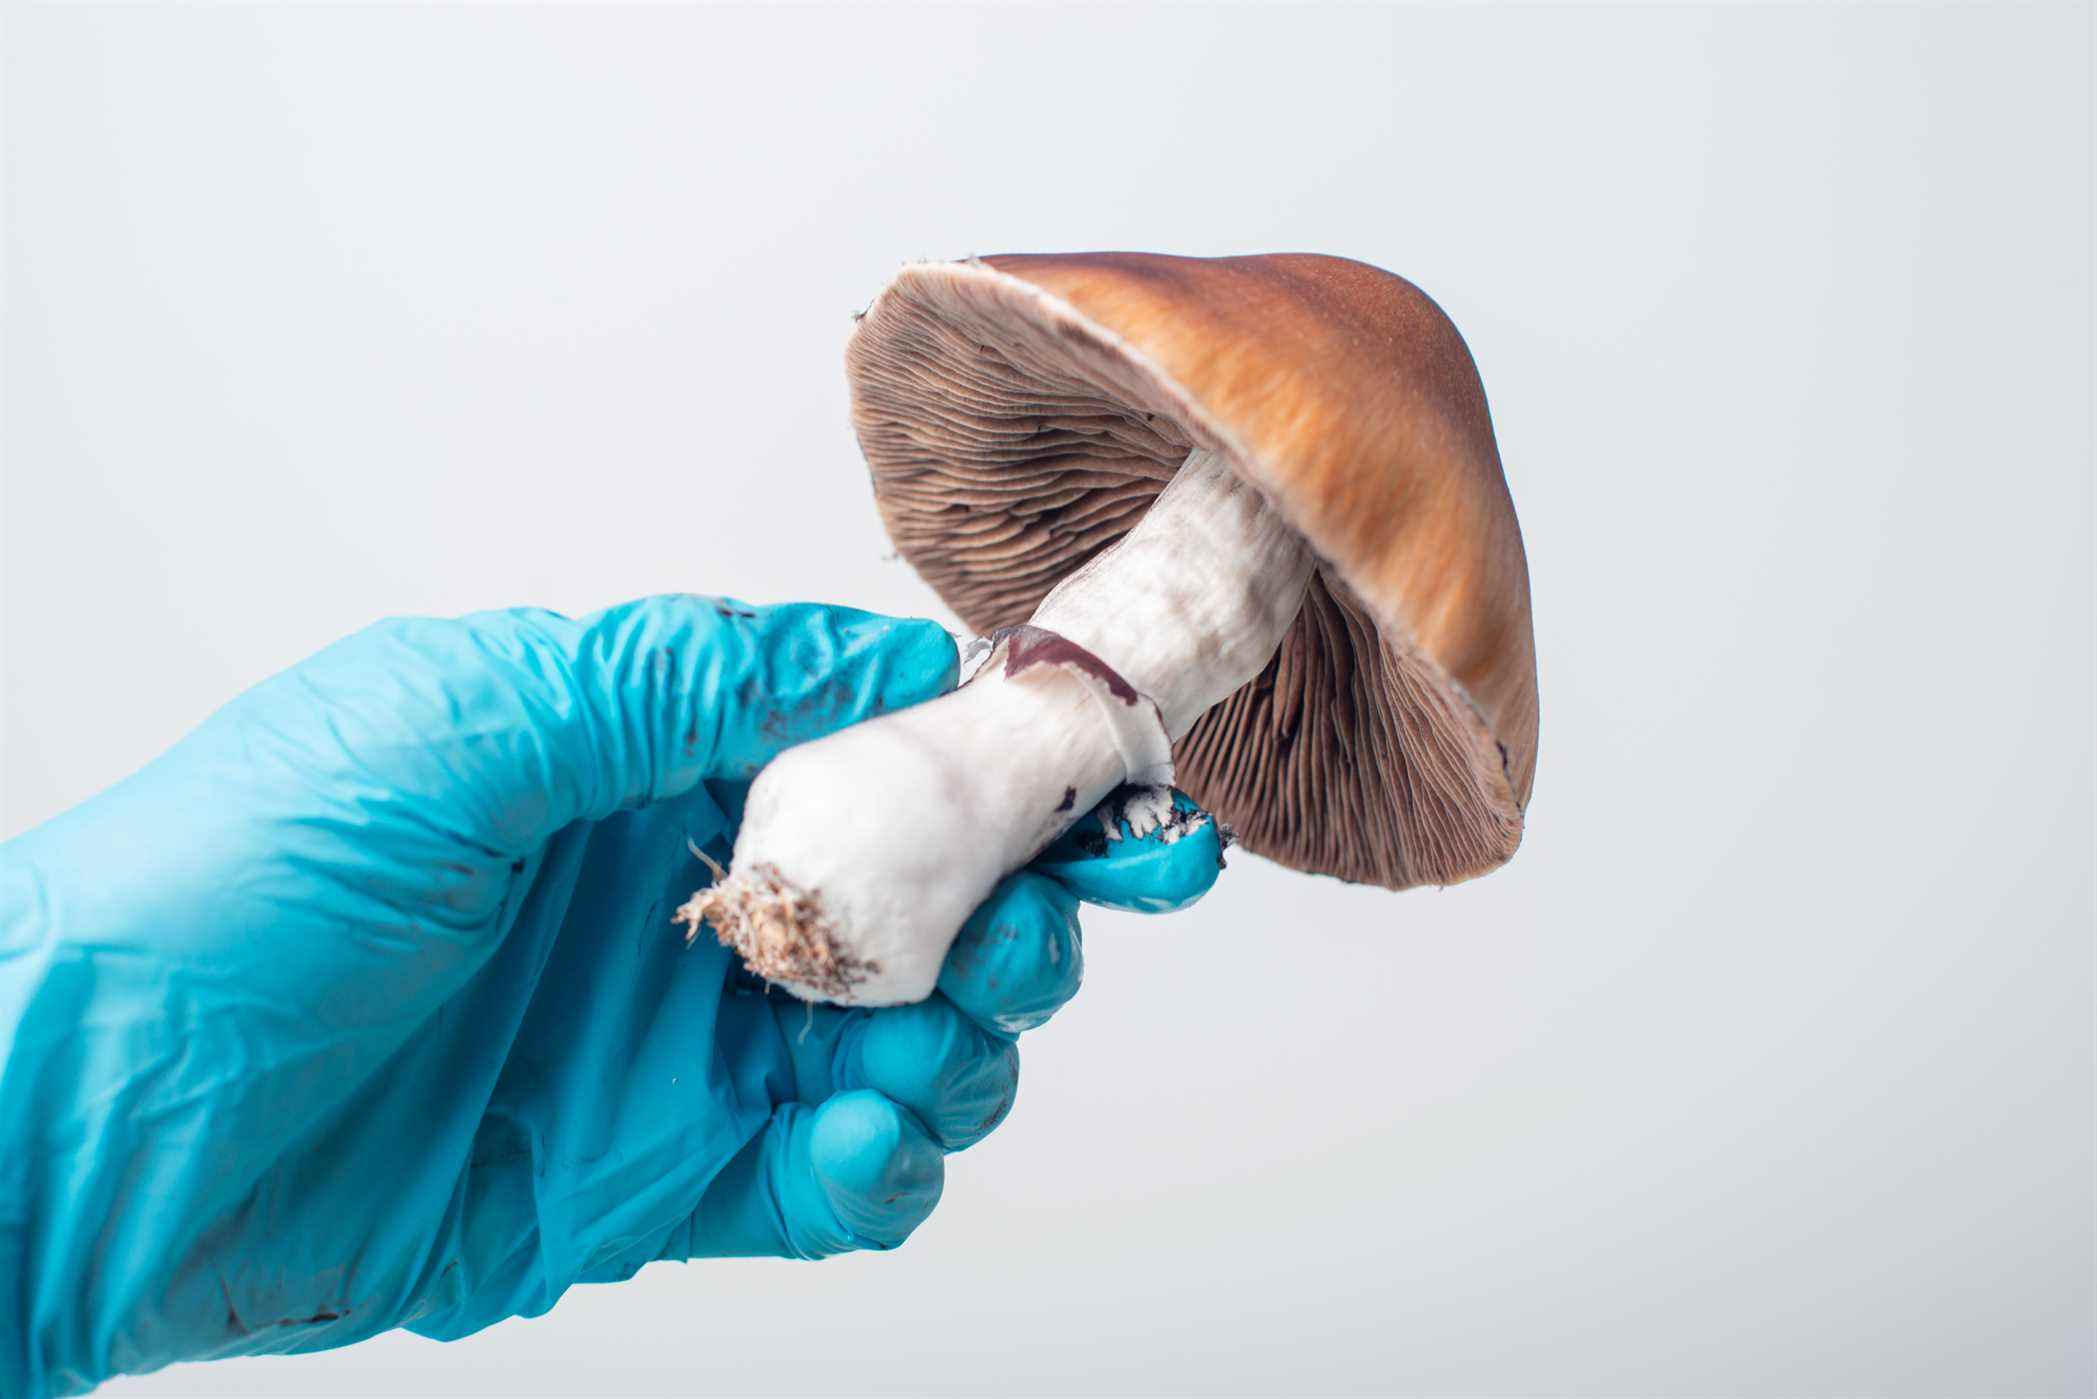 Technicien de laboratoire tenant un champignon psilocybine